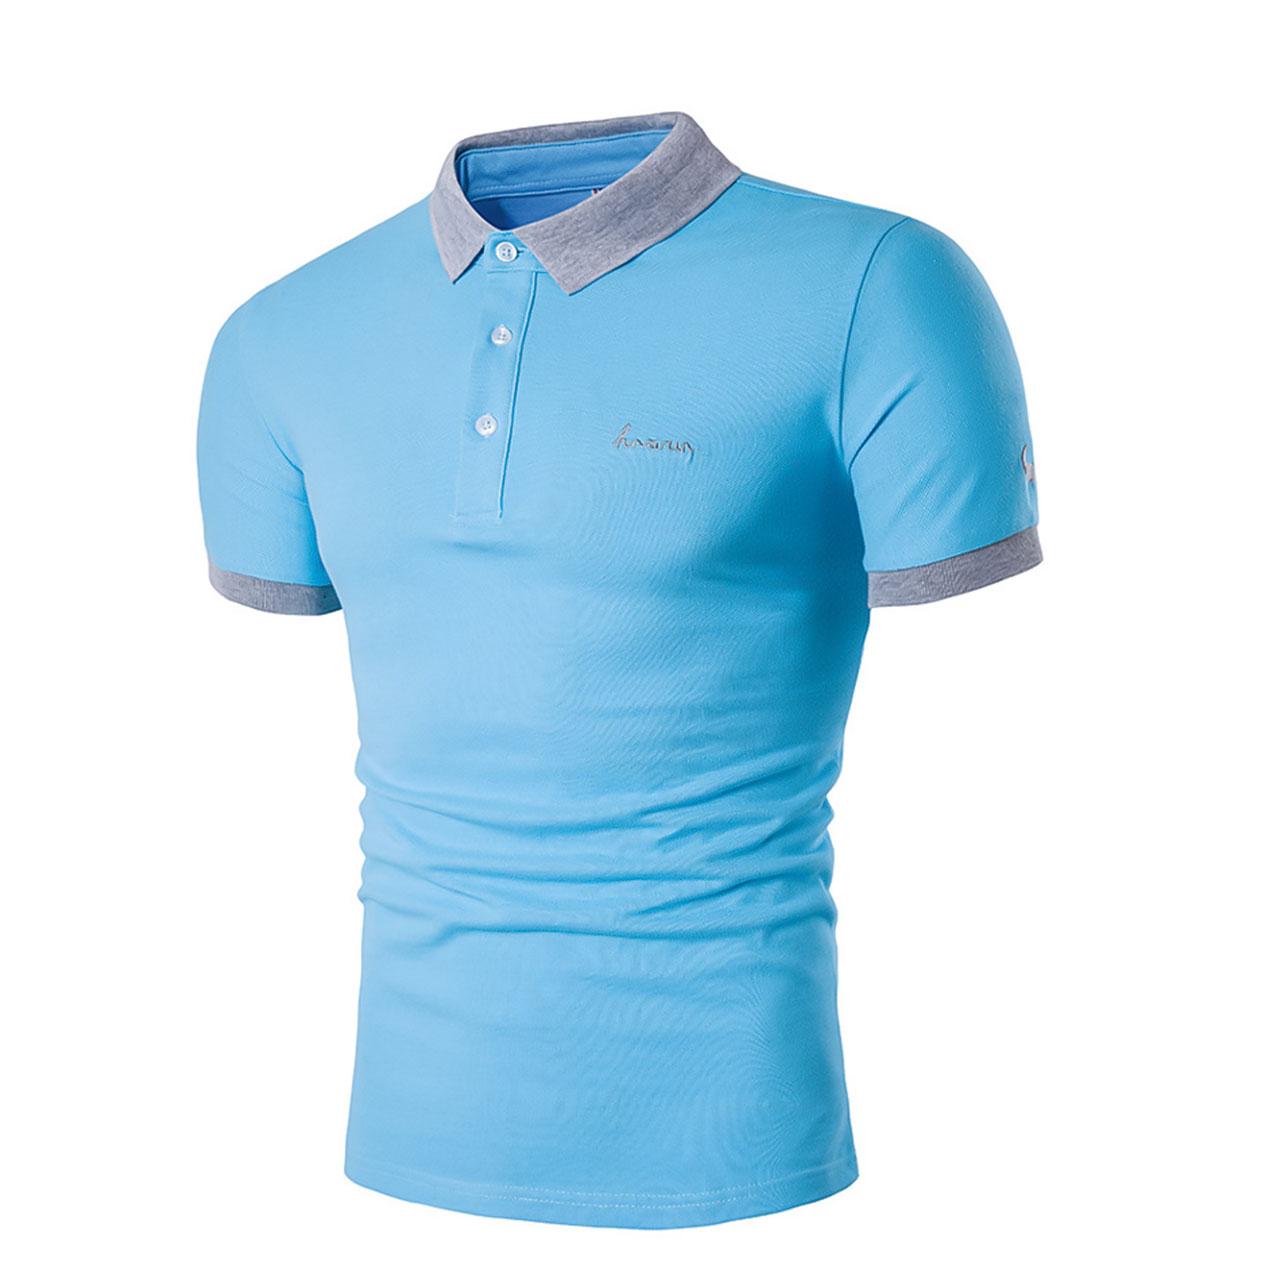 Buy Solid Collared Light Blue Polo Shirt Mens Sweatshirt USA